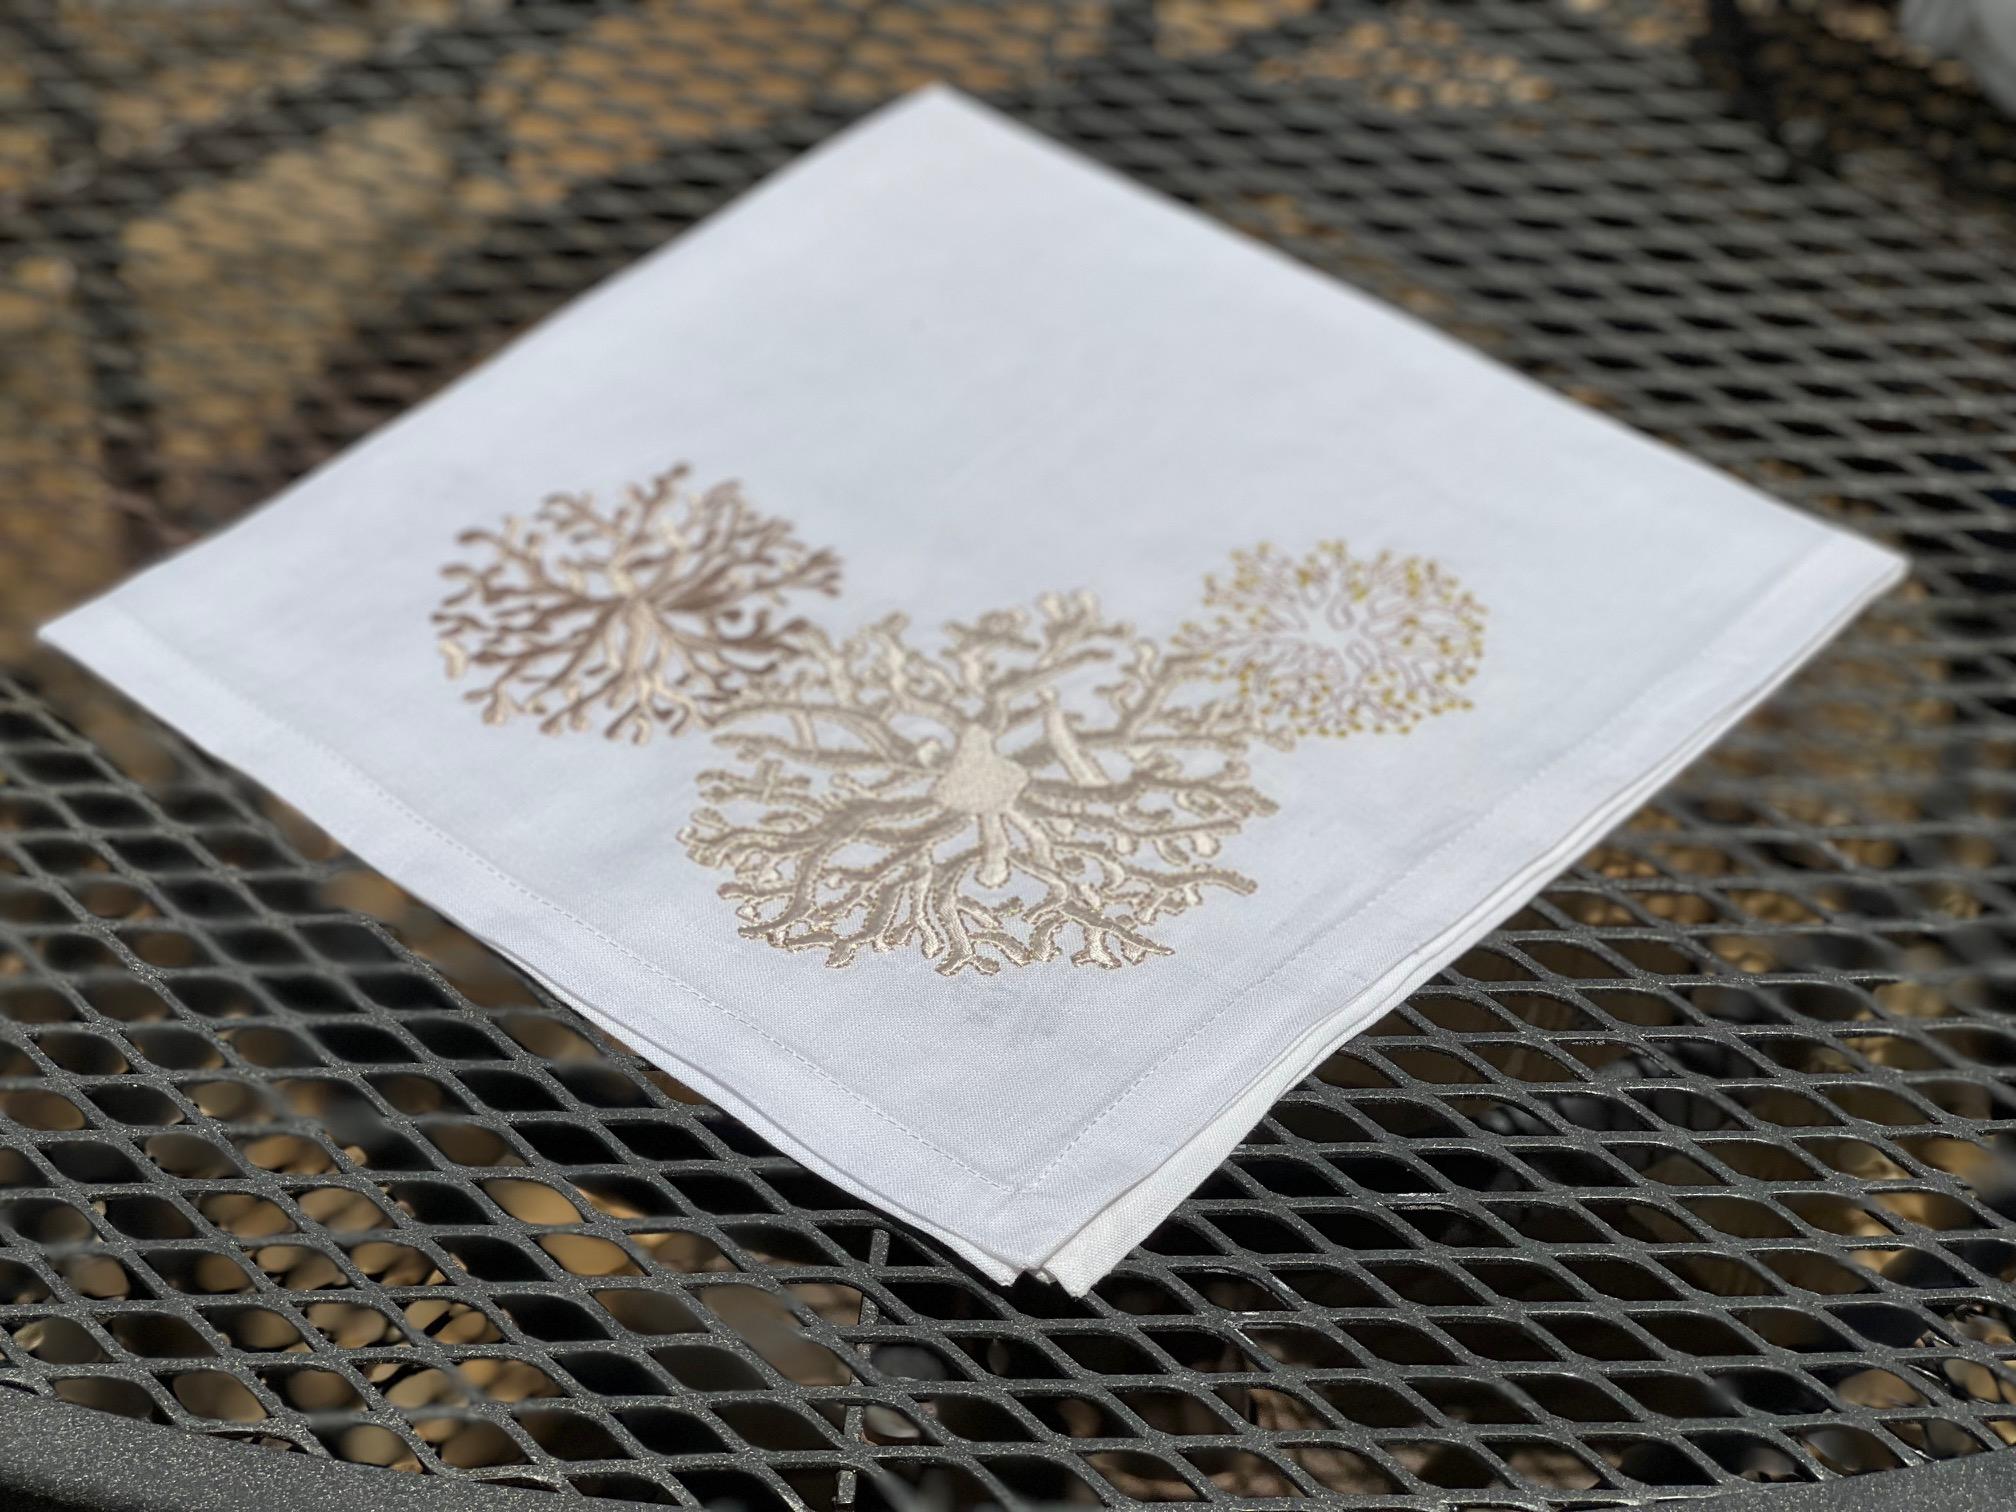 Chinese Kim Seybert Embroidered Napkins, Golden Sea Coral on White Linen